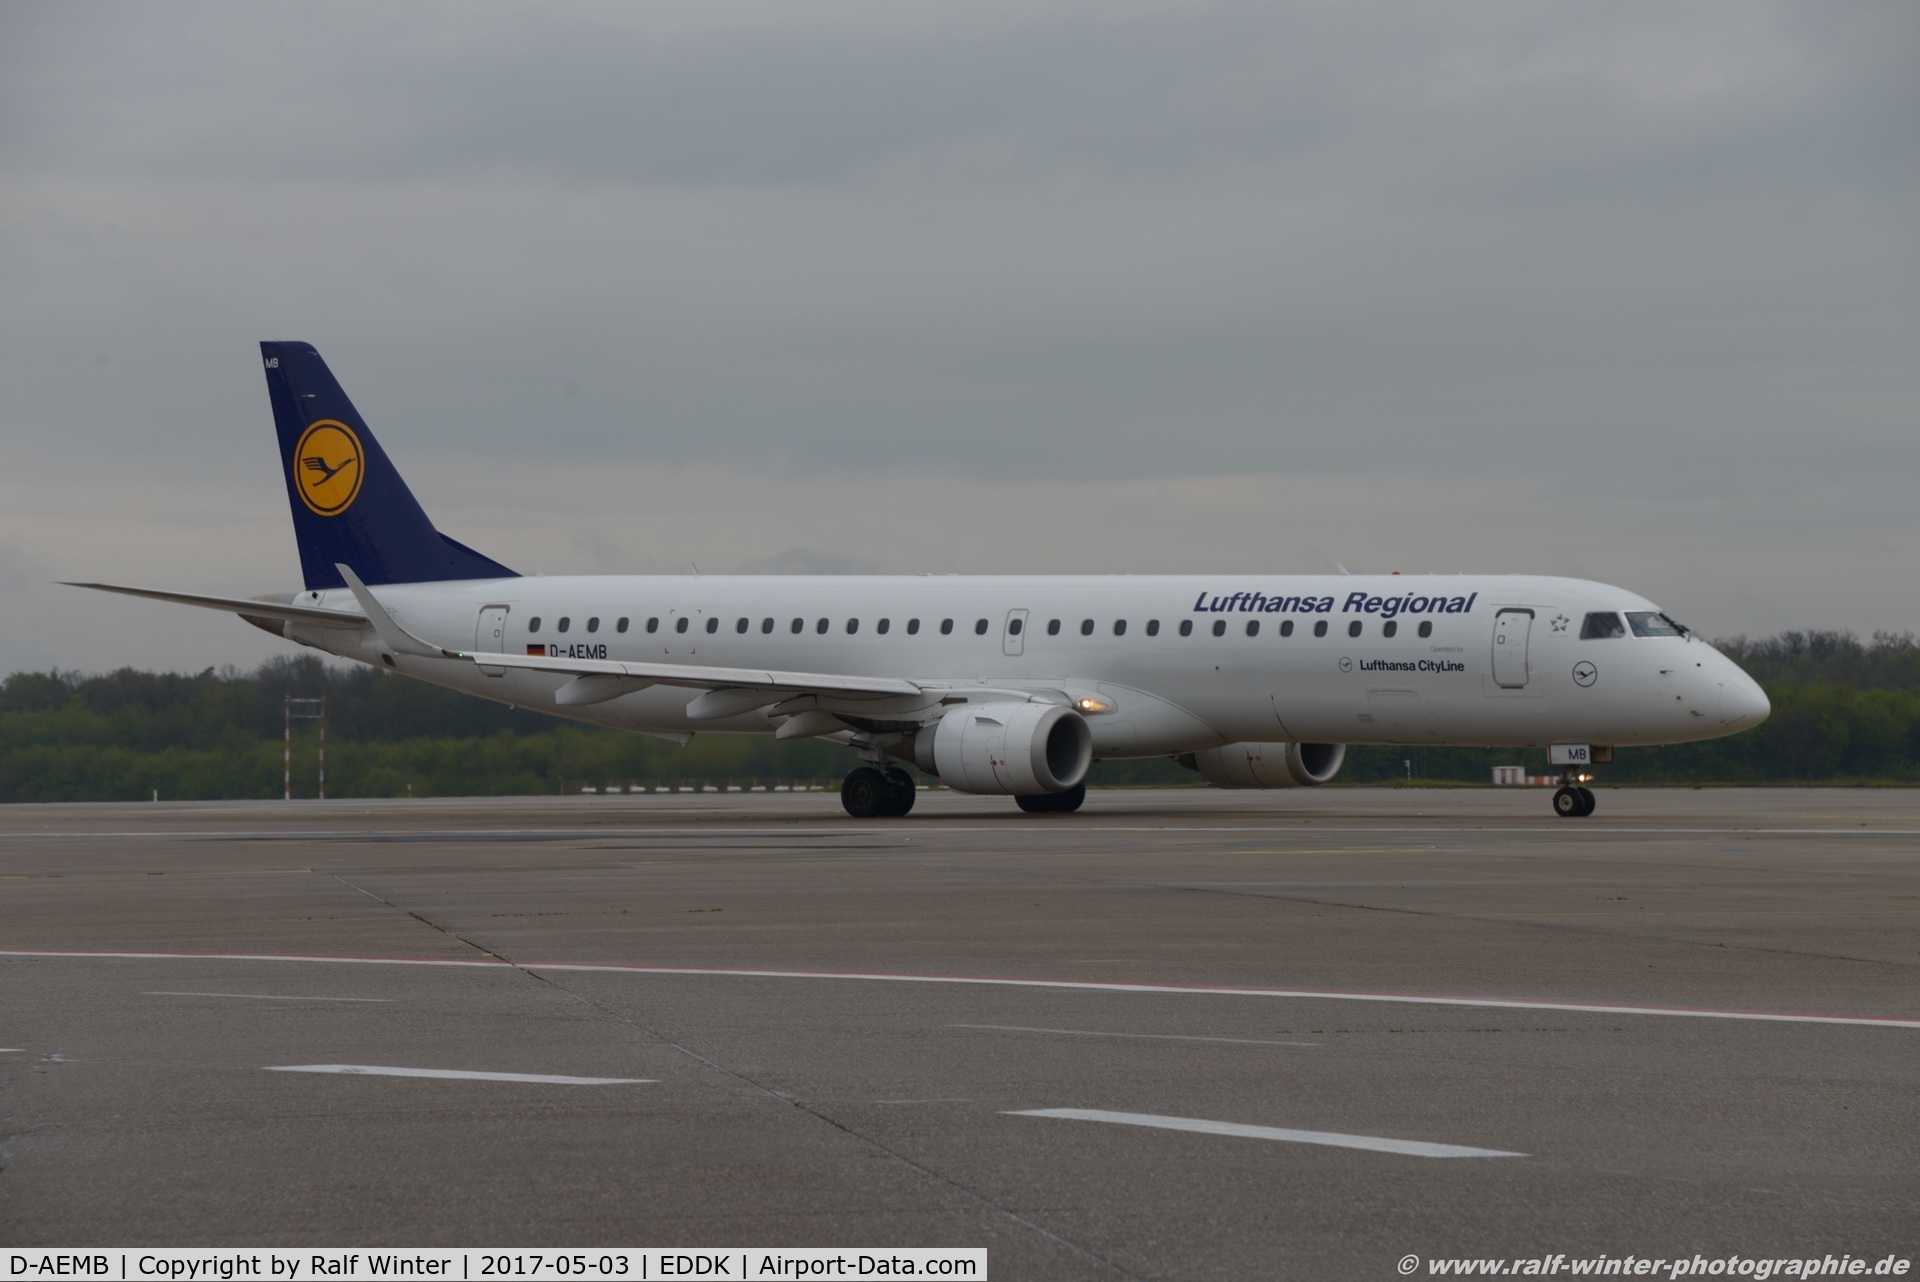 D-AEMB, 2009 Embraer 195LR (ERJ-190-200LR) C/N 19000297, Embraer ERJ-195LR 190-200LR - CL CLH Lufthansa CityLine Lufthansa Regional - 19000297 - D-AEMB - 03.05.2017 - CGN